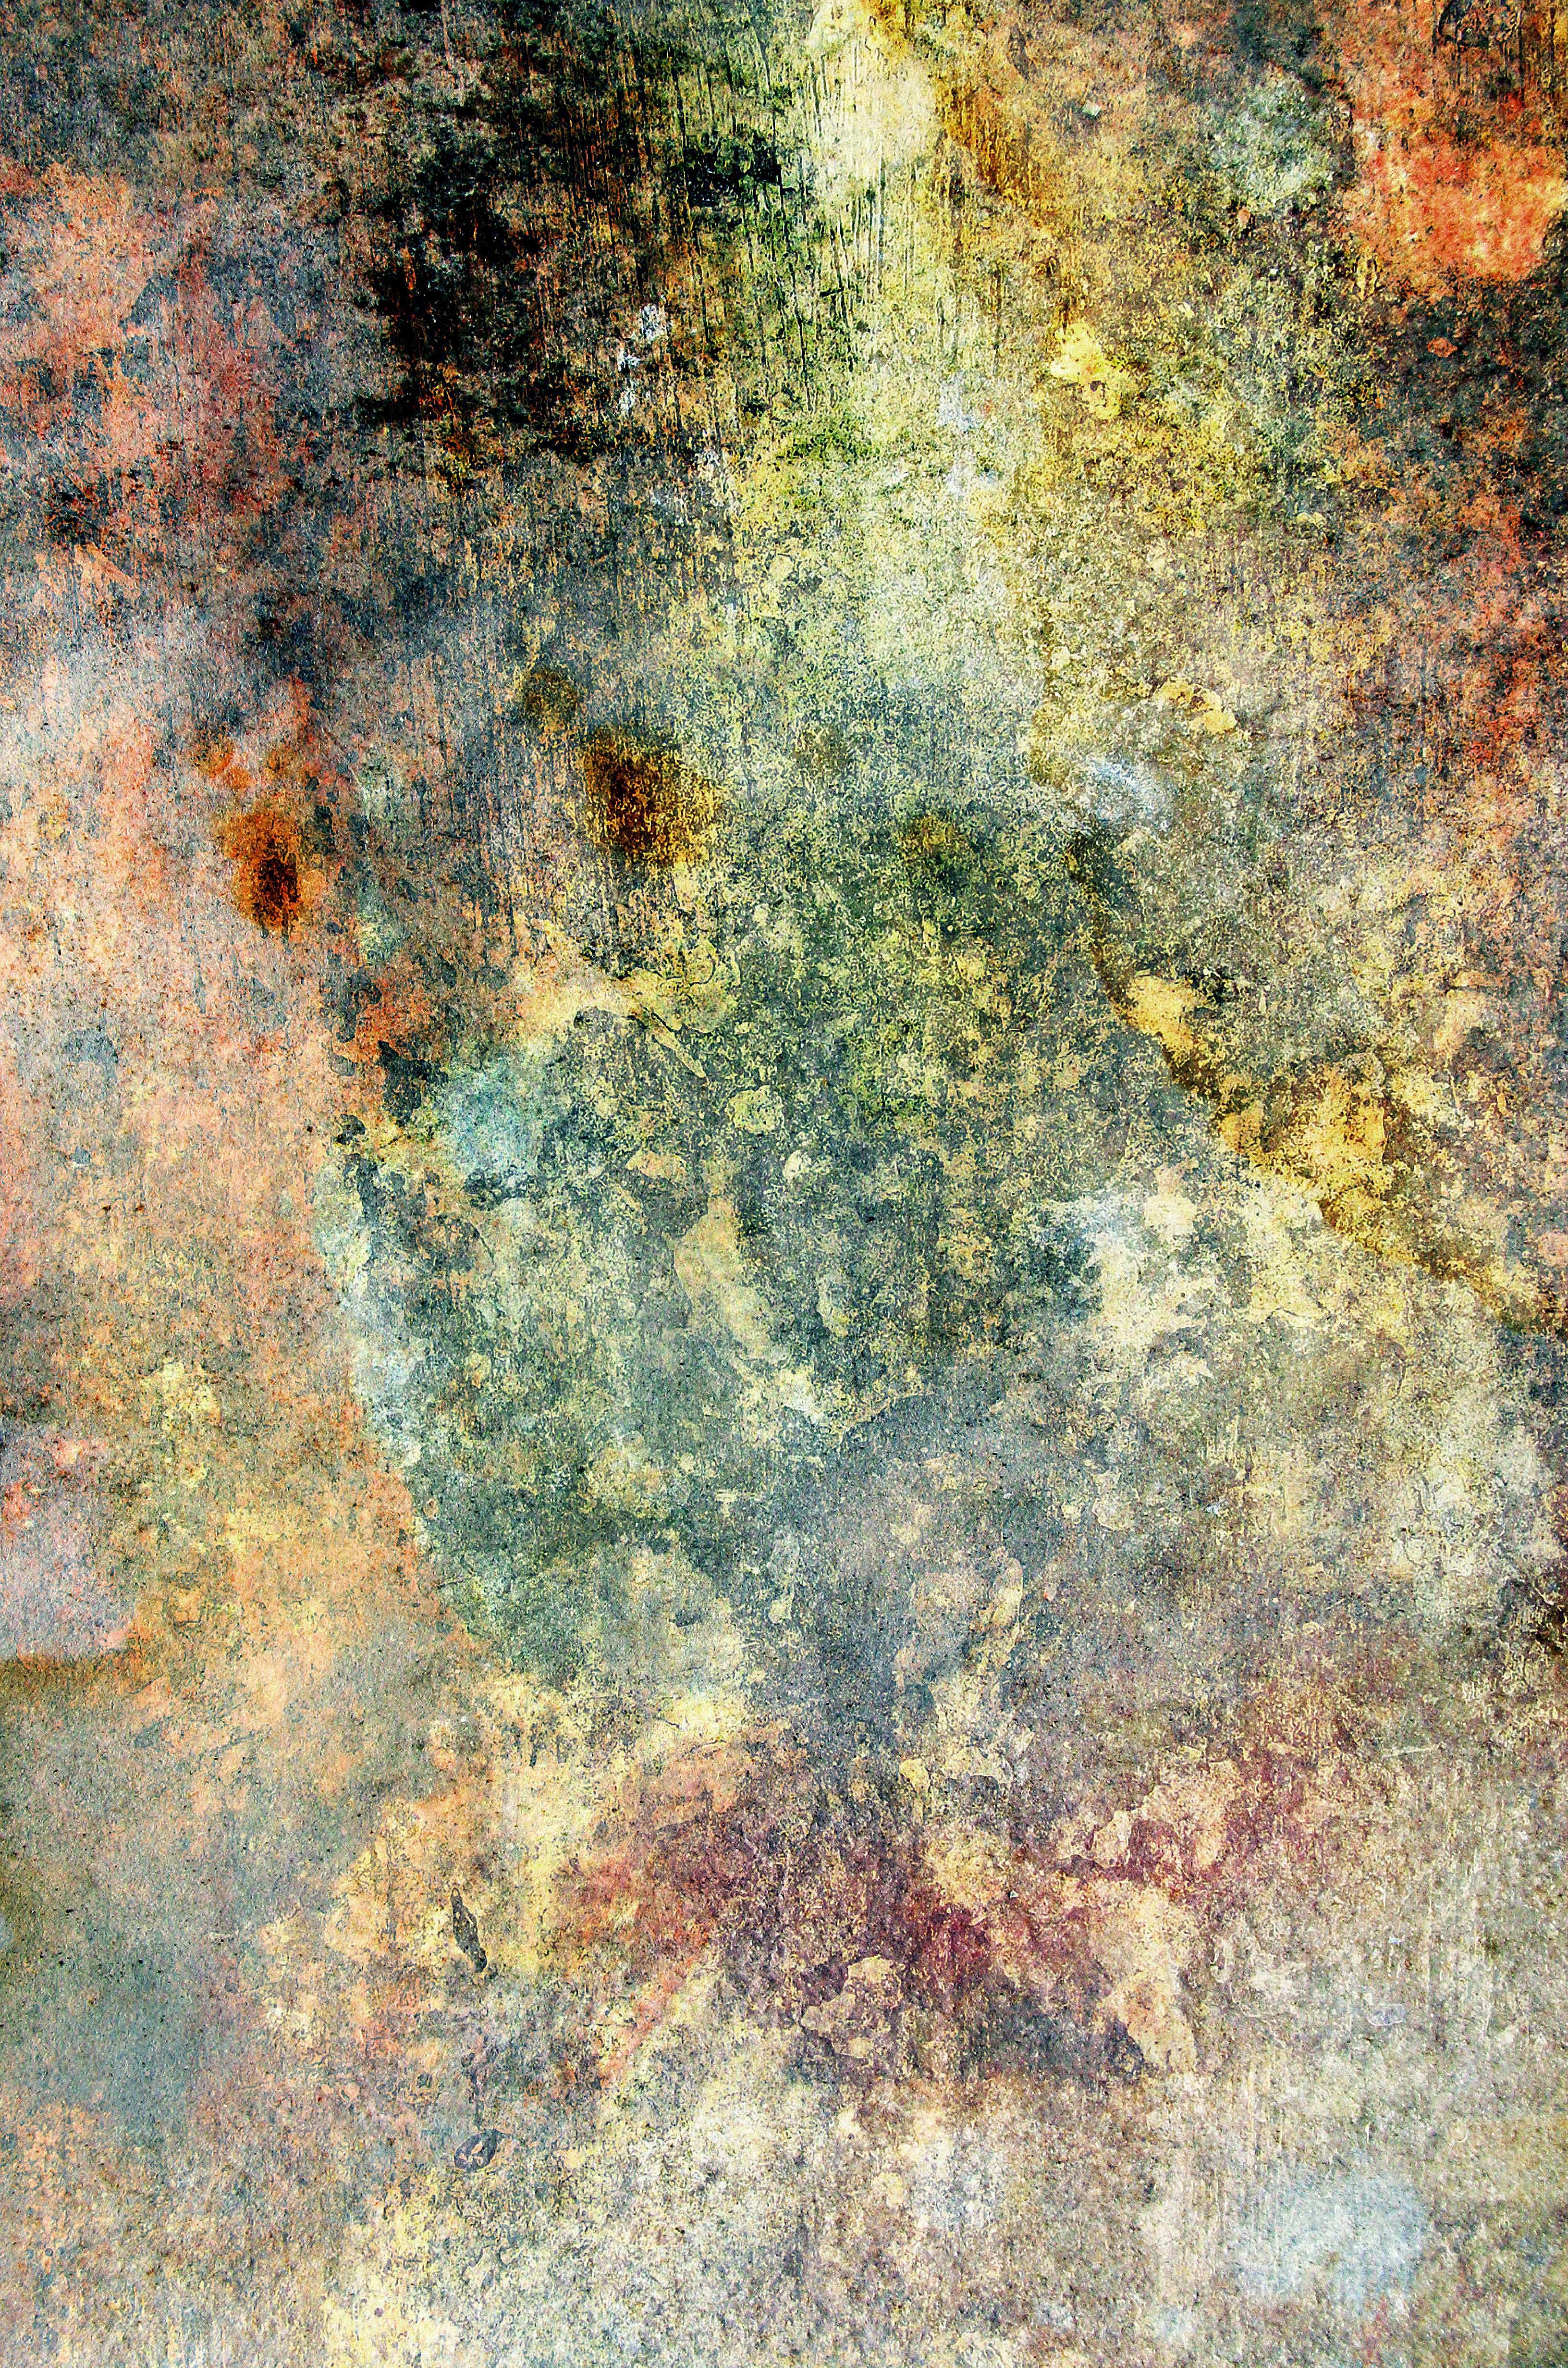 Abstract grunge texture photo